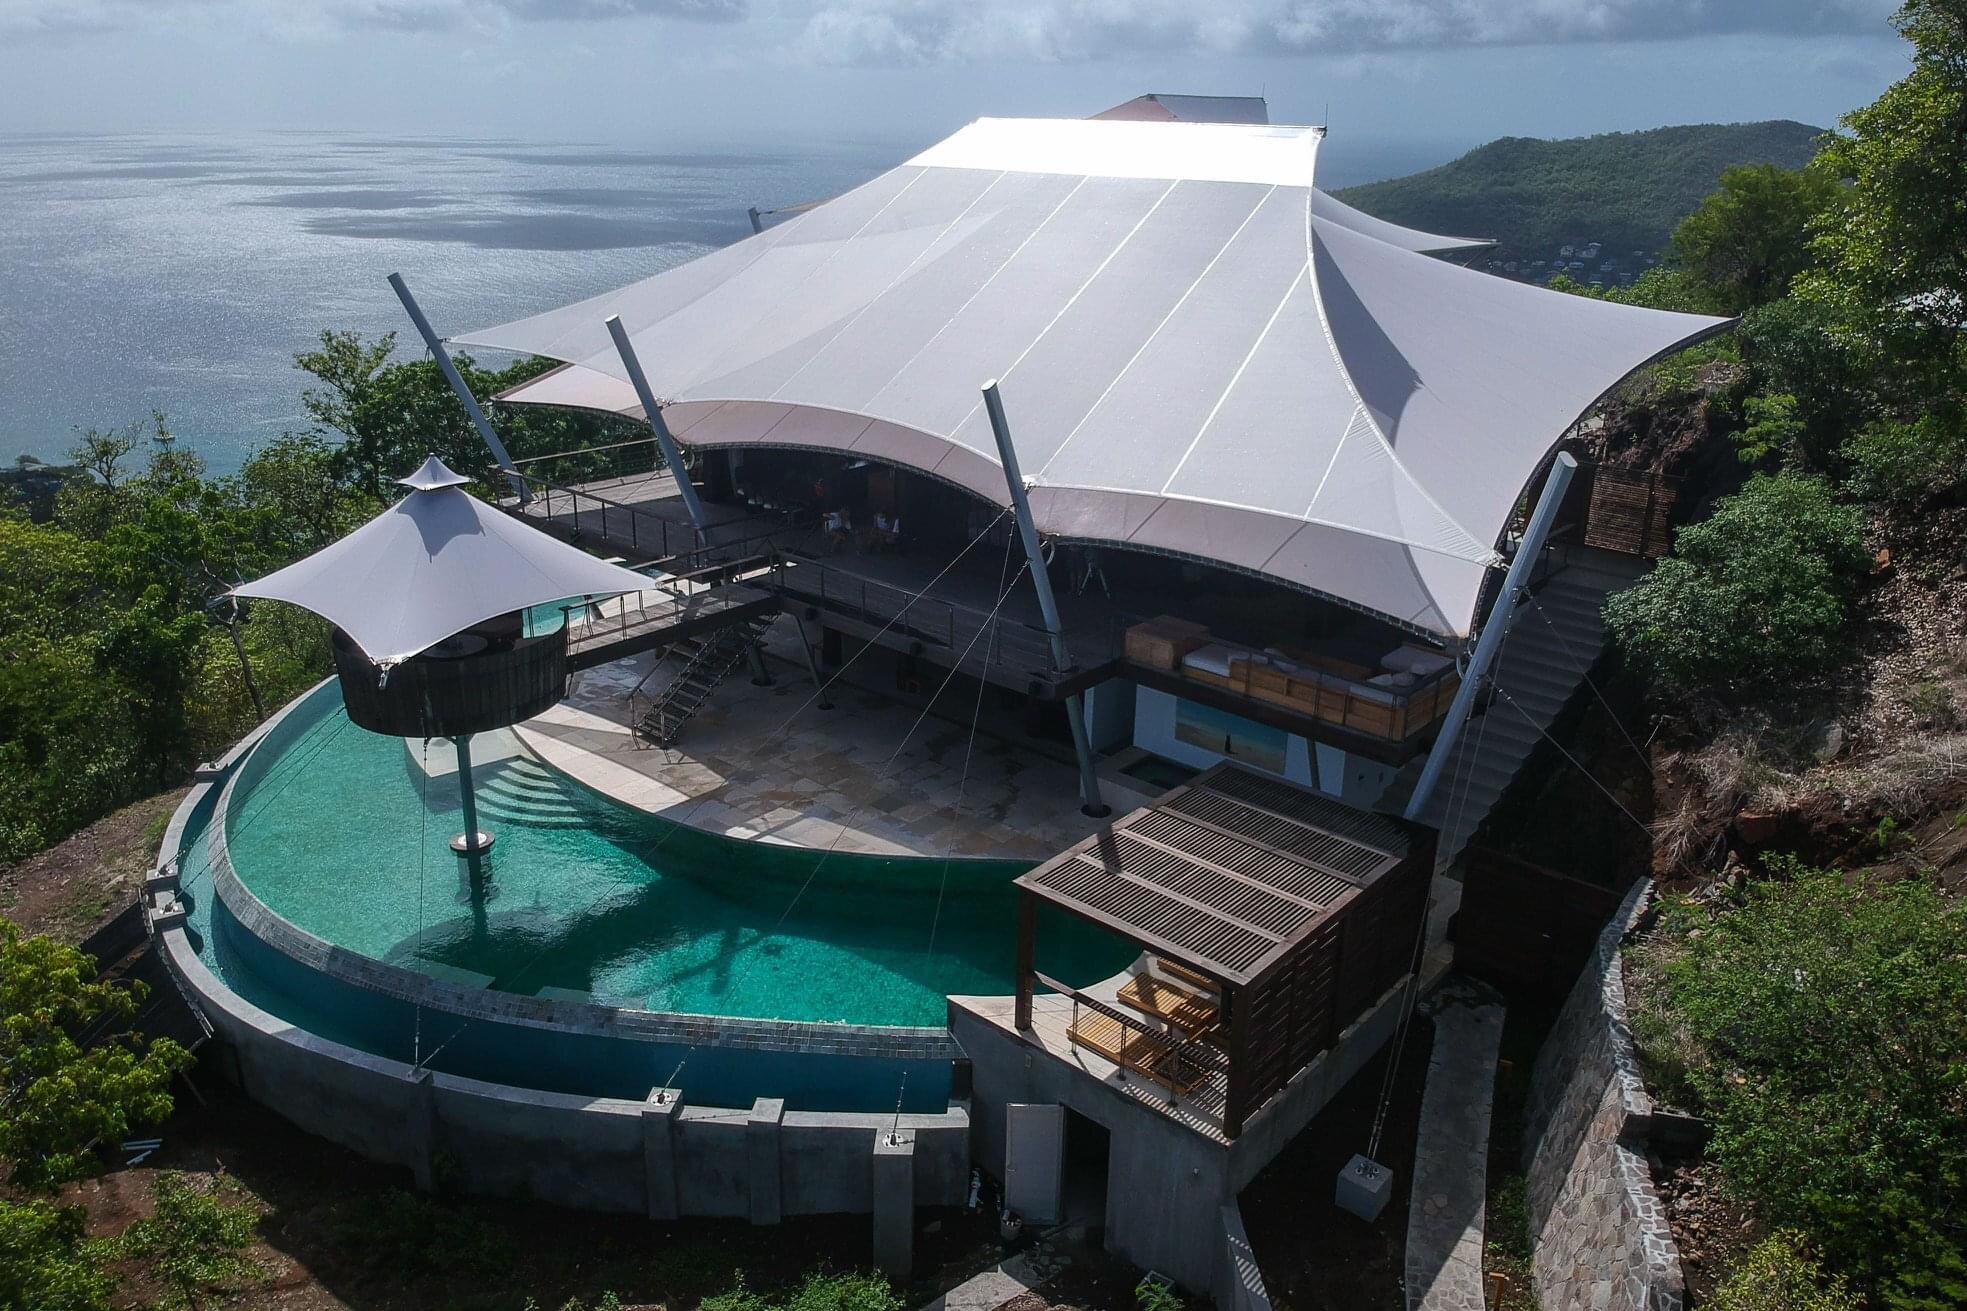 S.E.A.-Studio-Environmental-Architecture-David-Hertz-FAIA-Sail-House-Cloud9-Bequia-Saint-Vincent-Grenadines-Caribbean-Island-sustainable-regenerative-restorative-green-design-hospitality-tropical-resort-hotel-biomimetic-tensile-structure-select-14.JPG